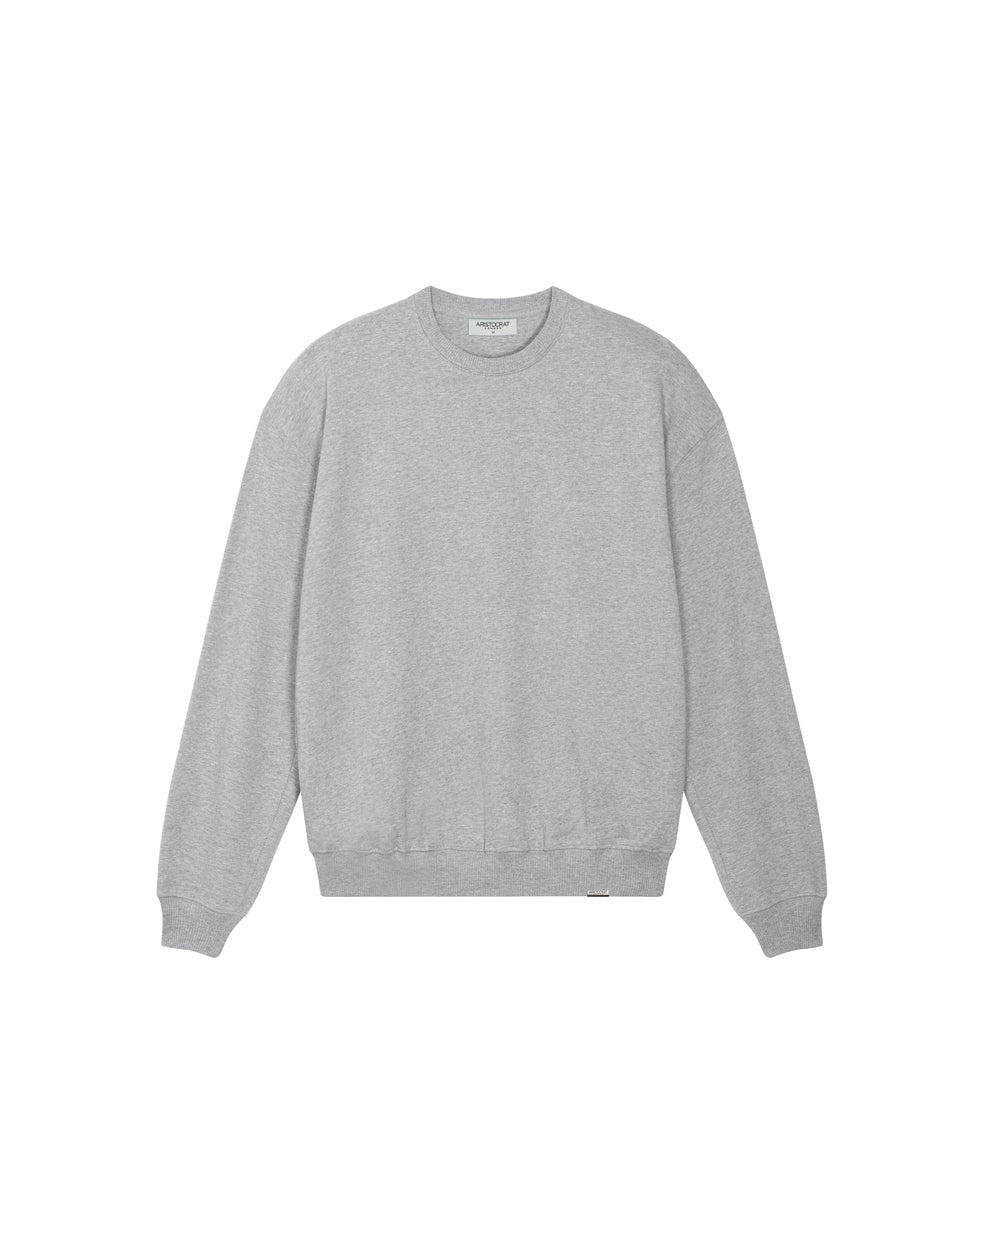 Essential Sweater - Ash Grey